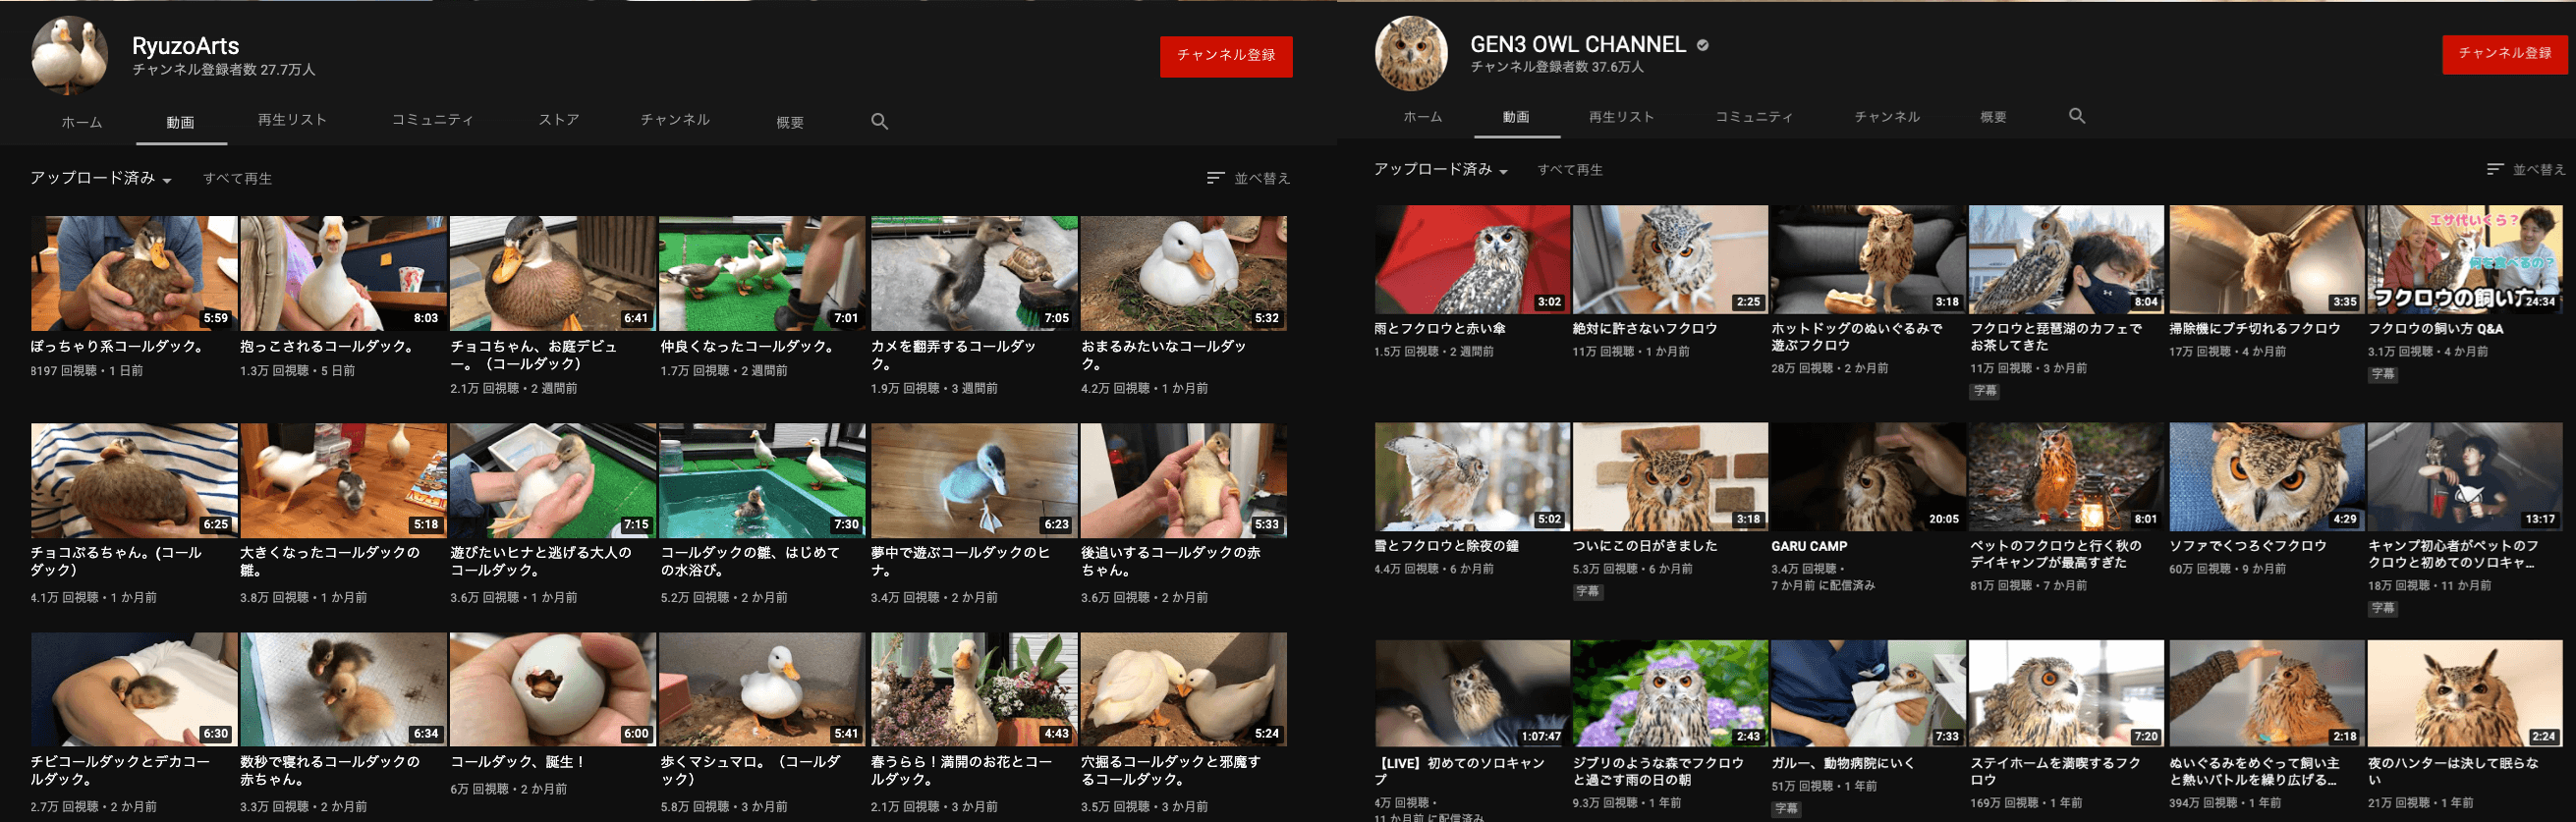 youtube-nich animal channnel